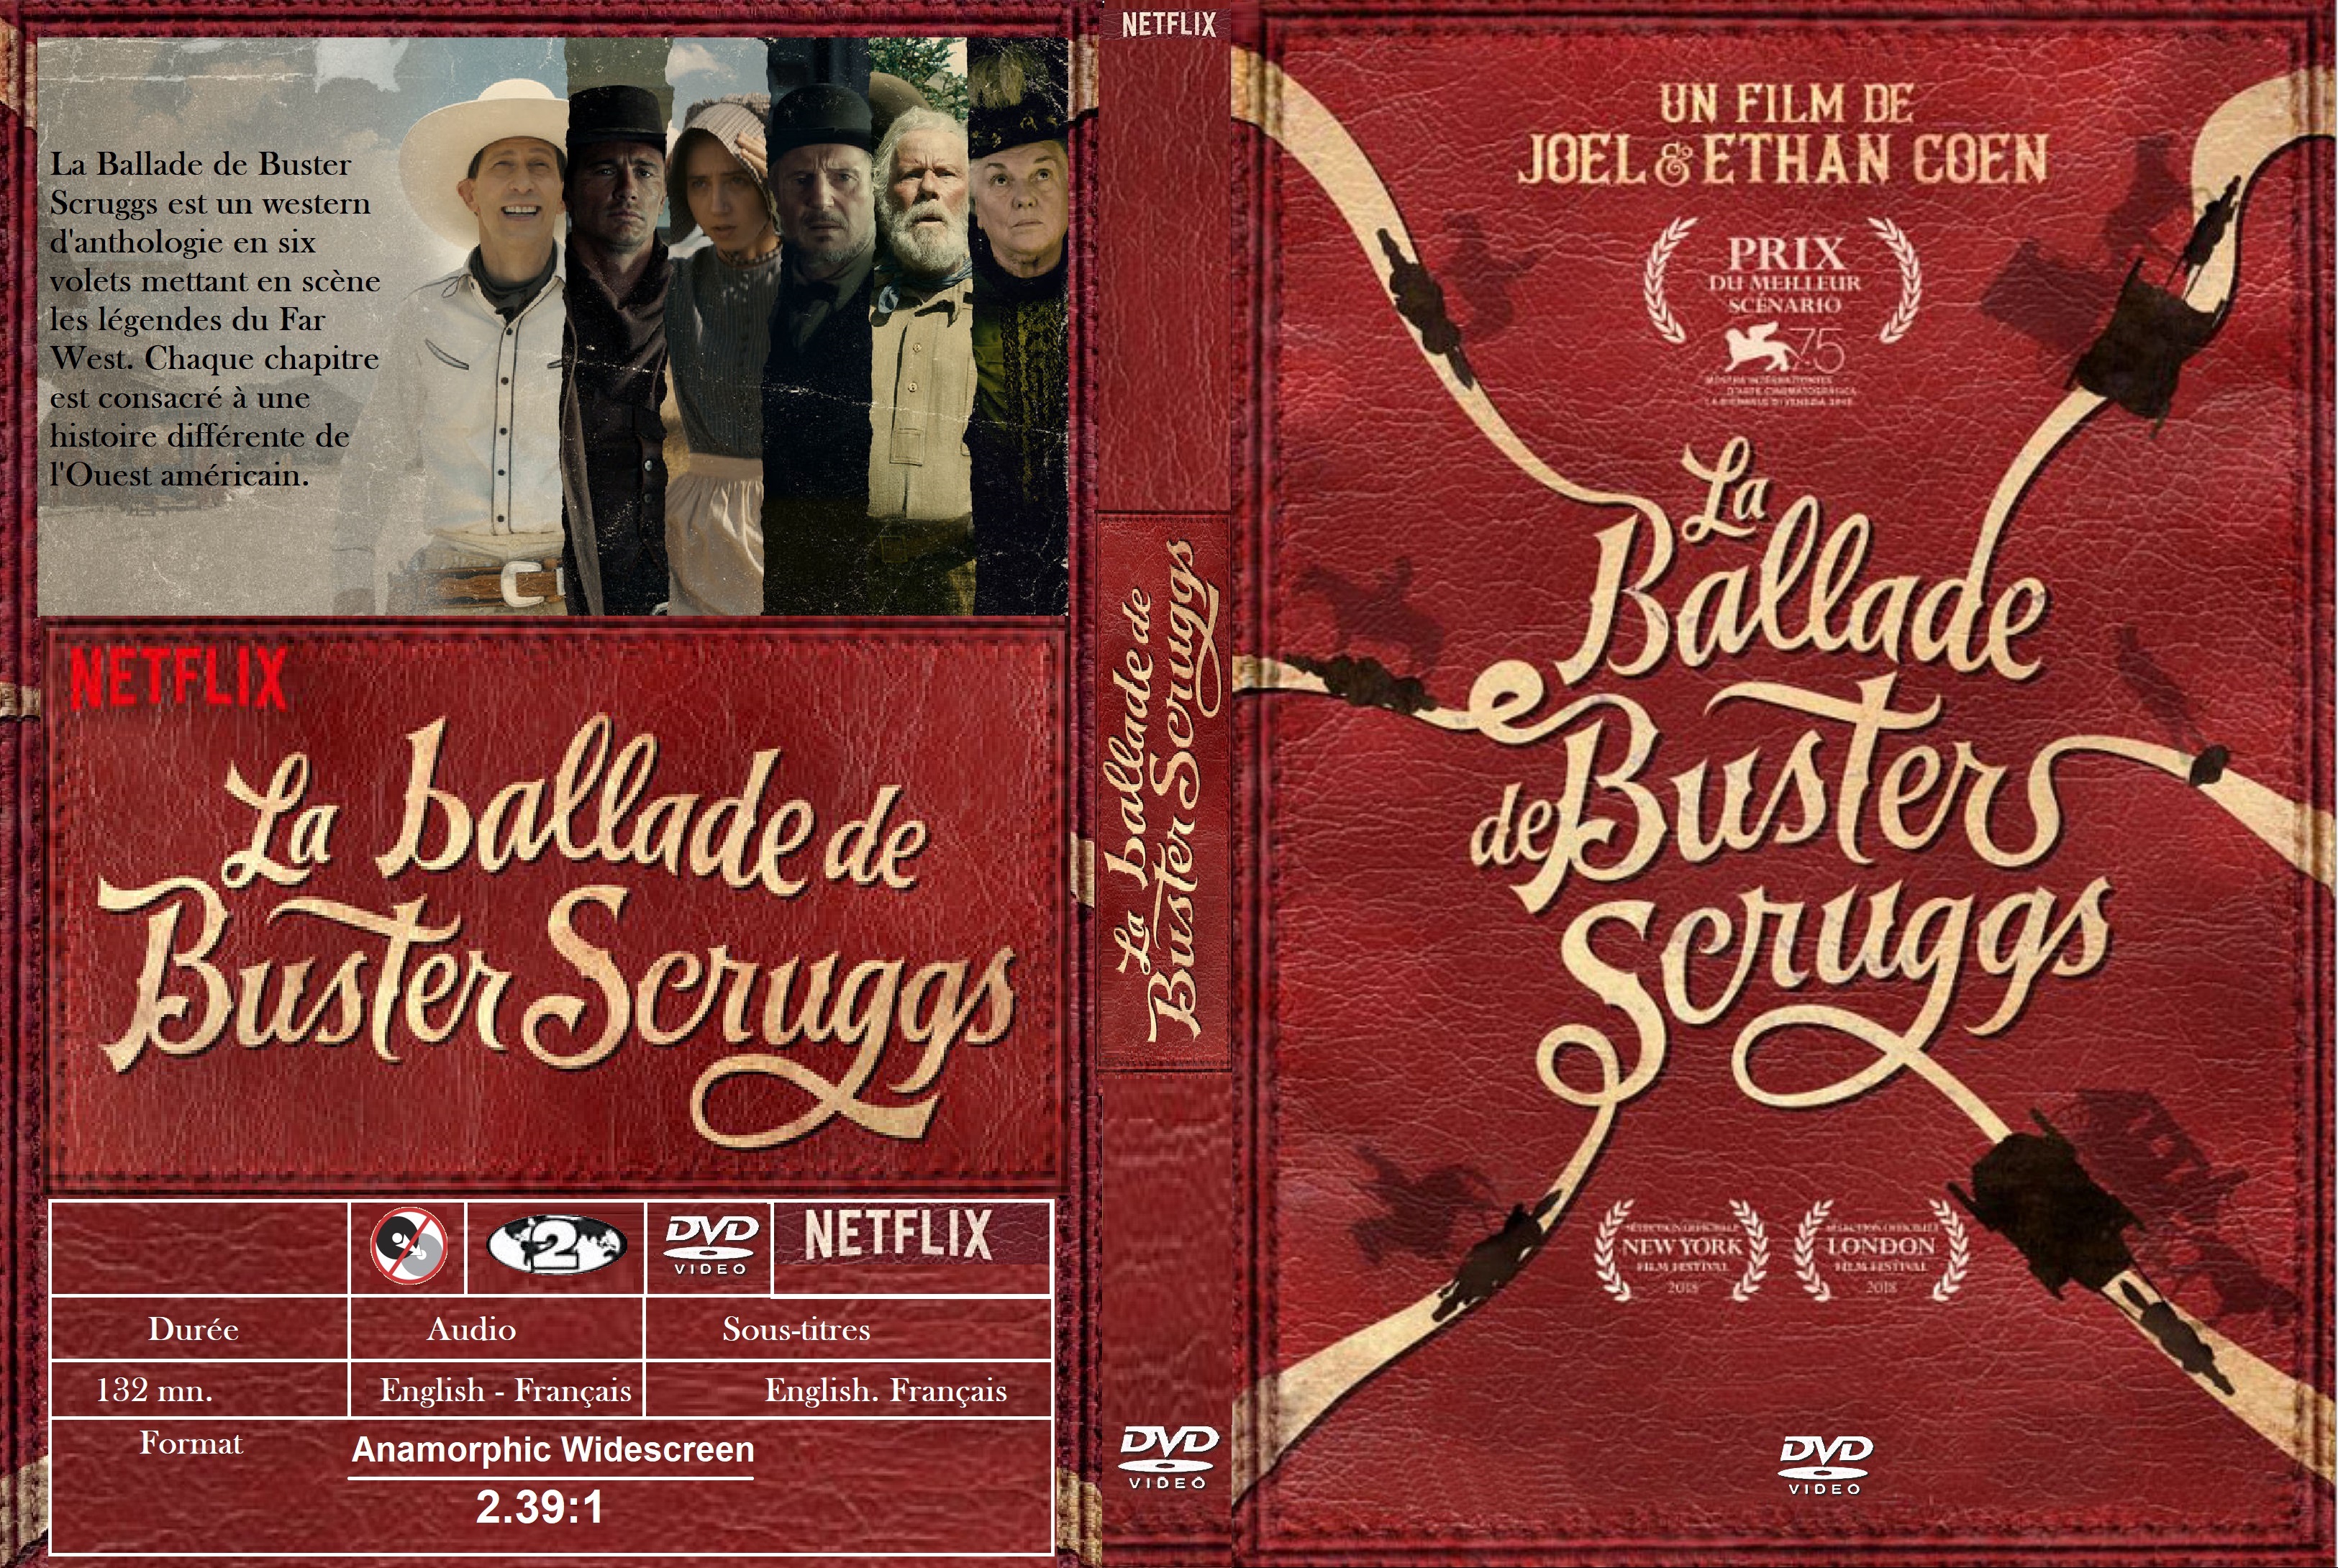 Jaquette DVD La ballade de Buster Scruggs custom